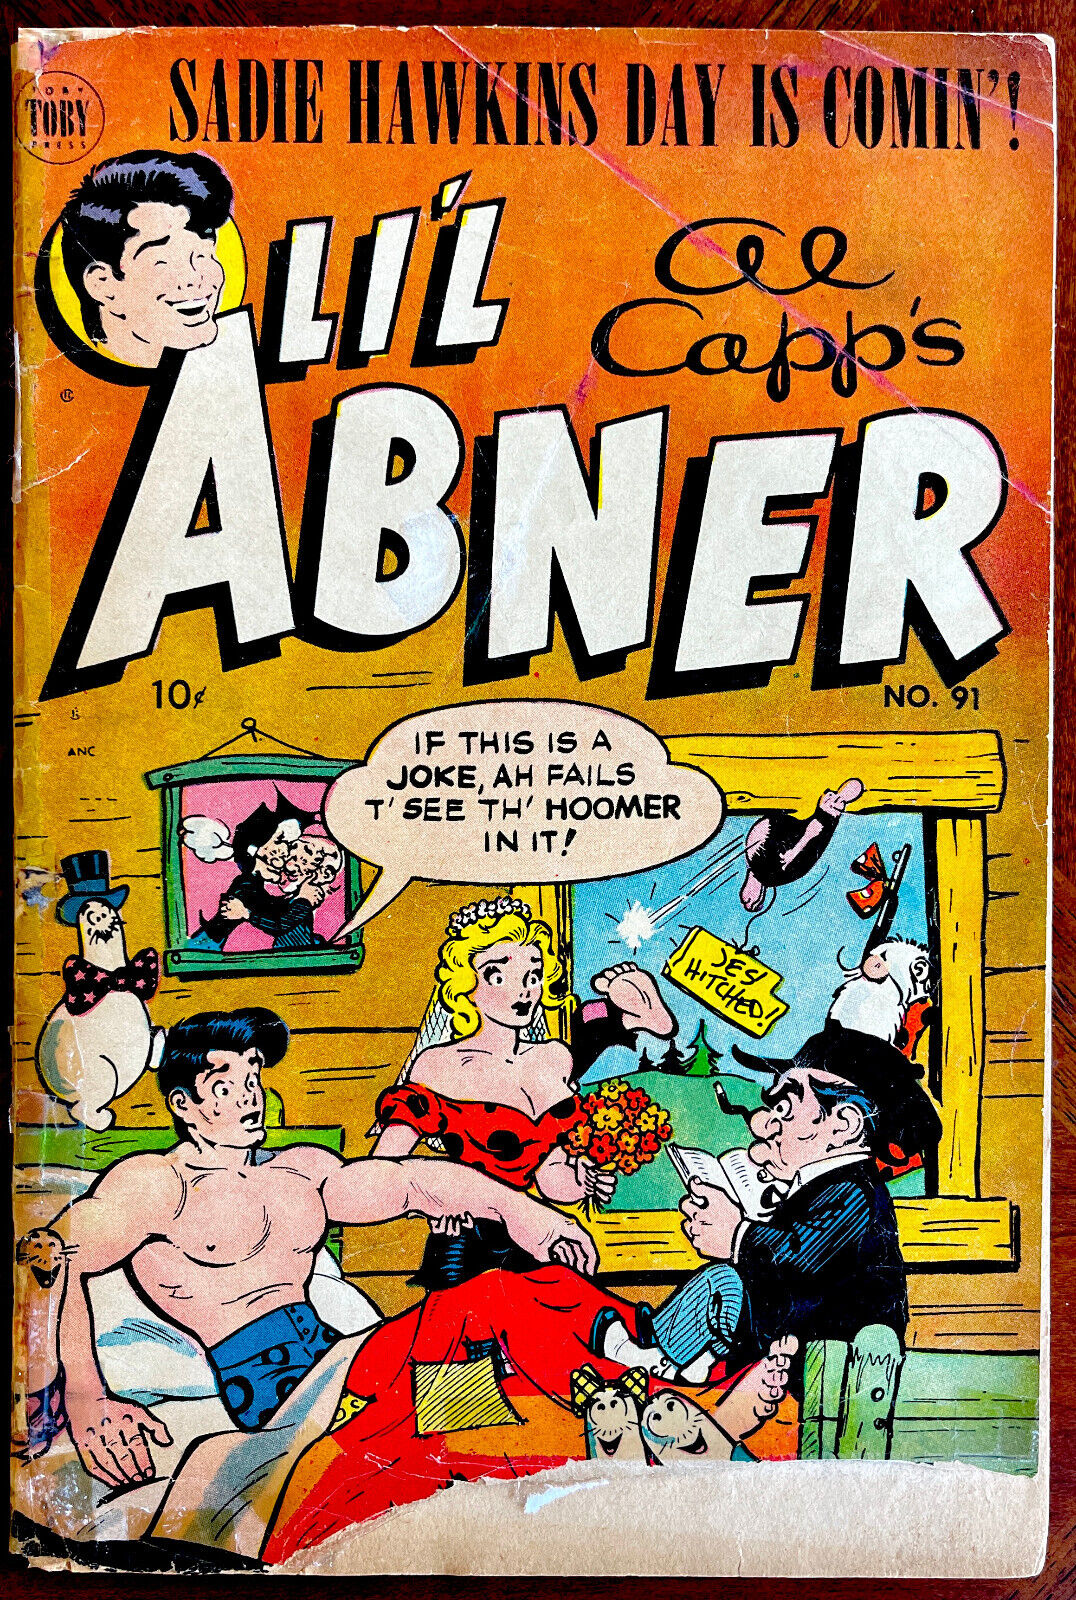 Li'l Abner #91 - 1952 - Toby Sadie Hawkins Day-Al Capp-Schmoo Cover - FAIR/GOOD